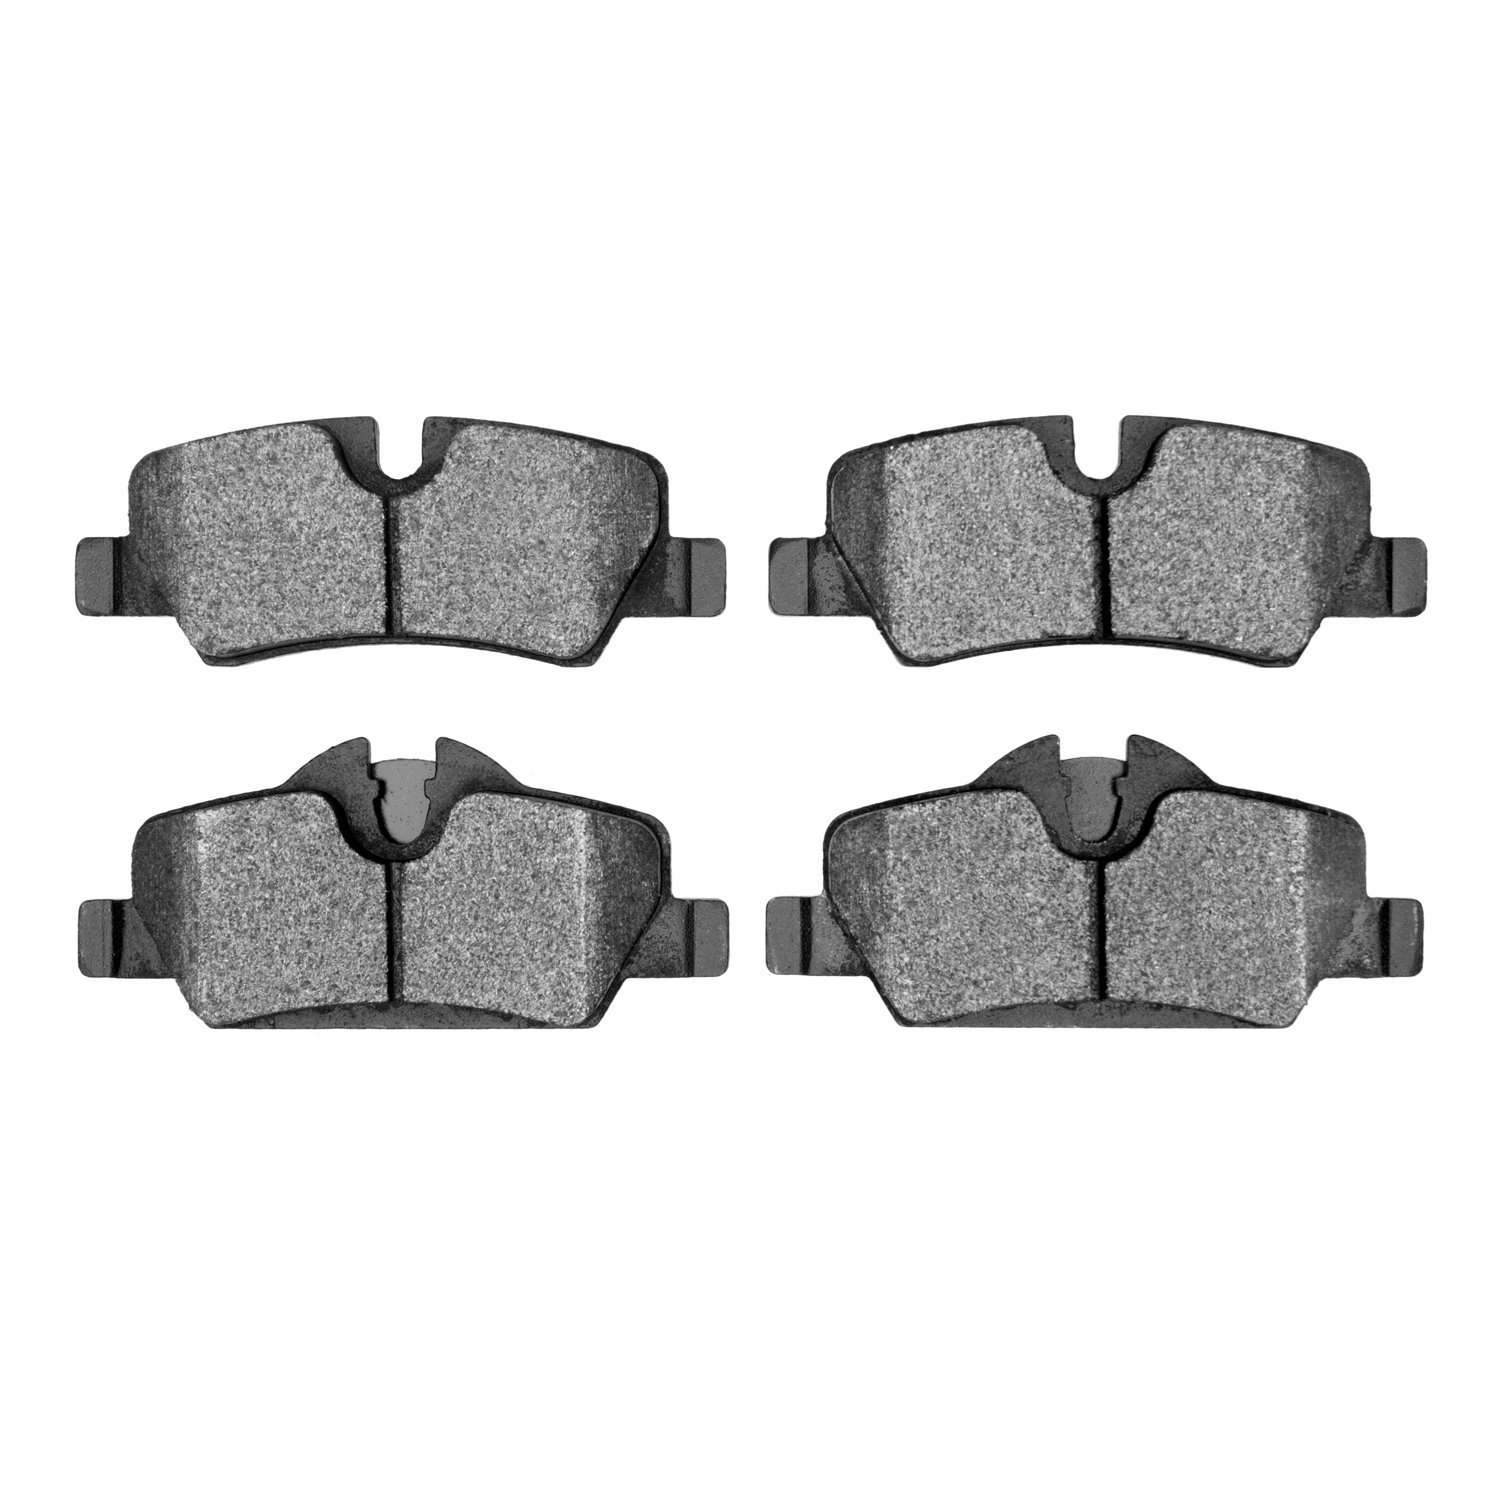 Ceramic Brake Pads, Fits Select Mini, Position: Rear